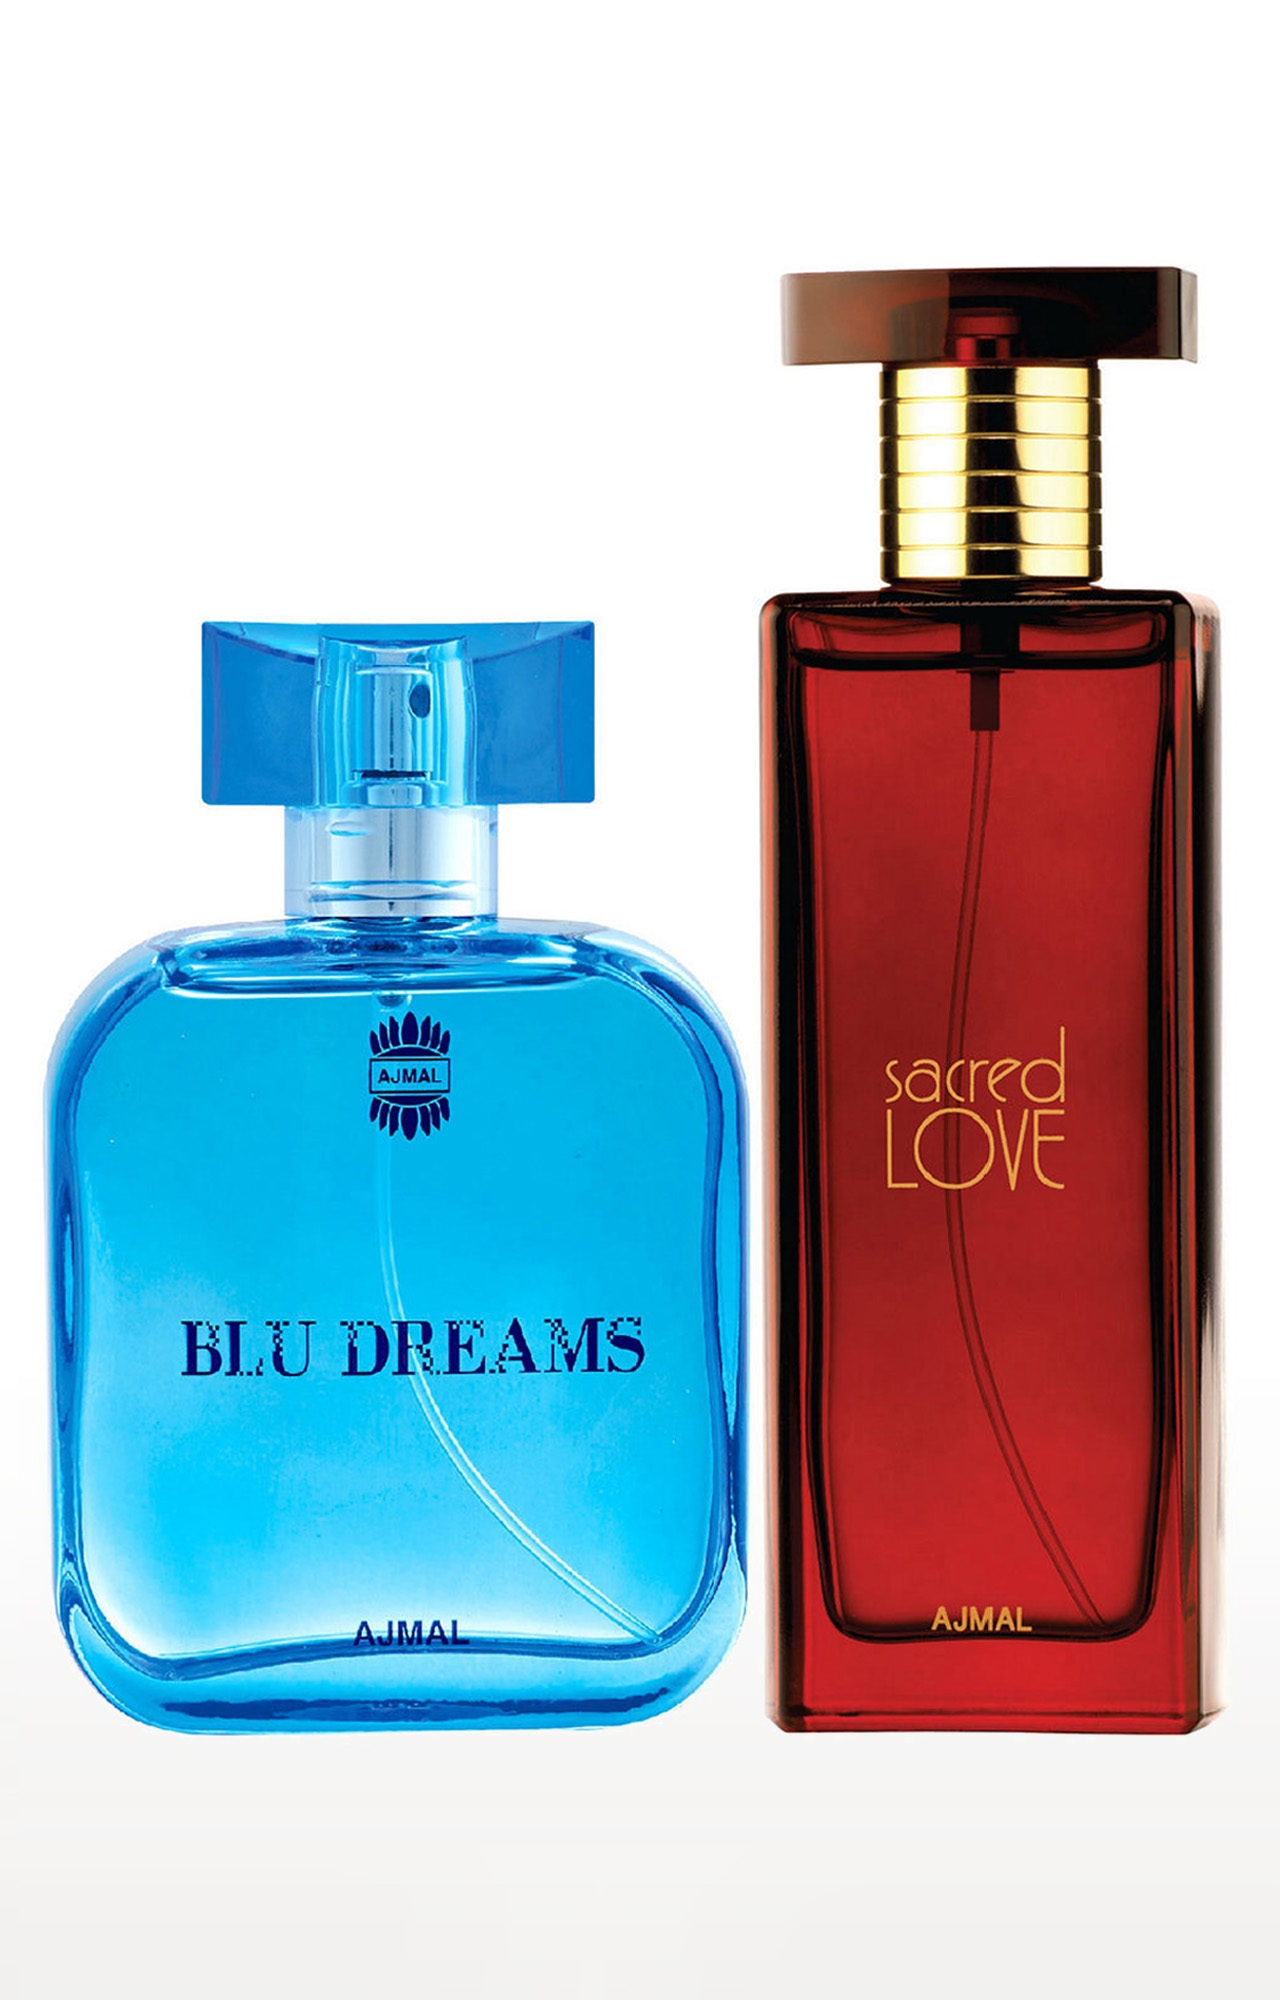 Ajmal Blu Dreams Edp Citrus Fruity Perfume 100Ml For Men And Sacred Love Edp Floral Musky Perfume 50Ml For Women